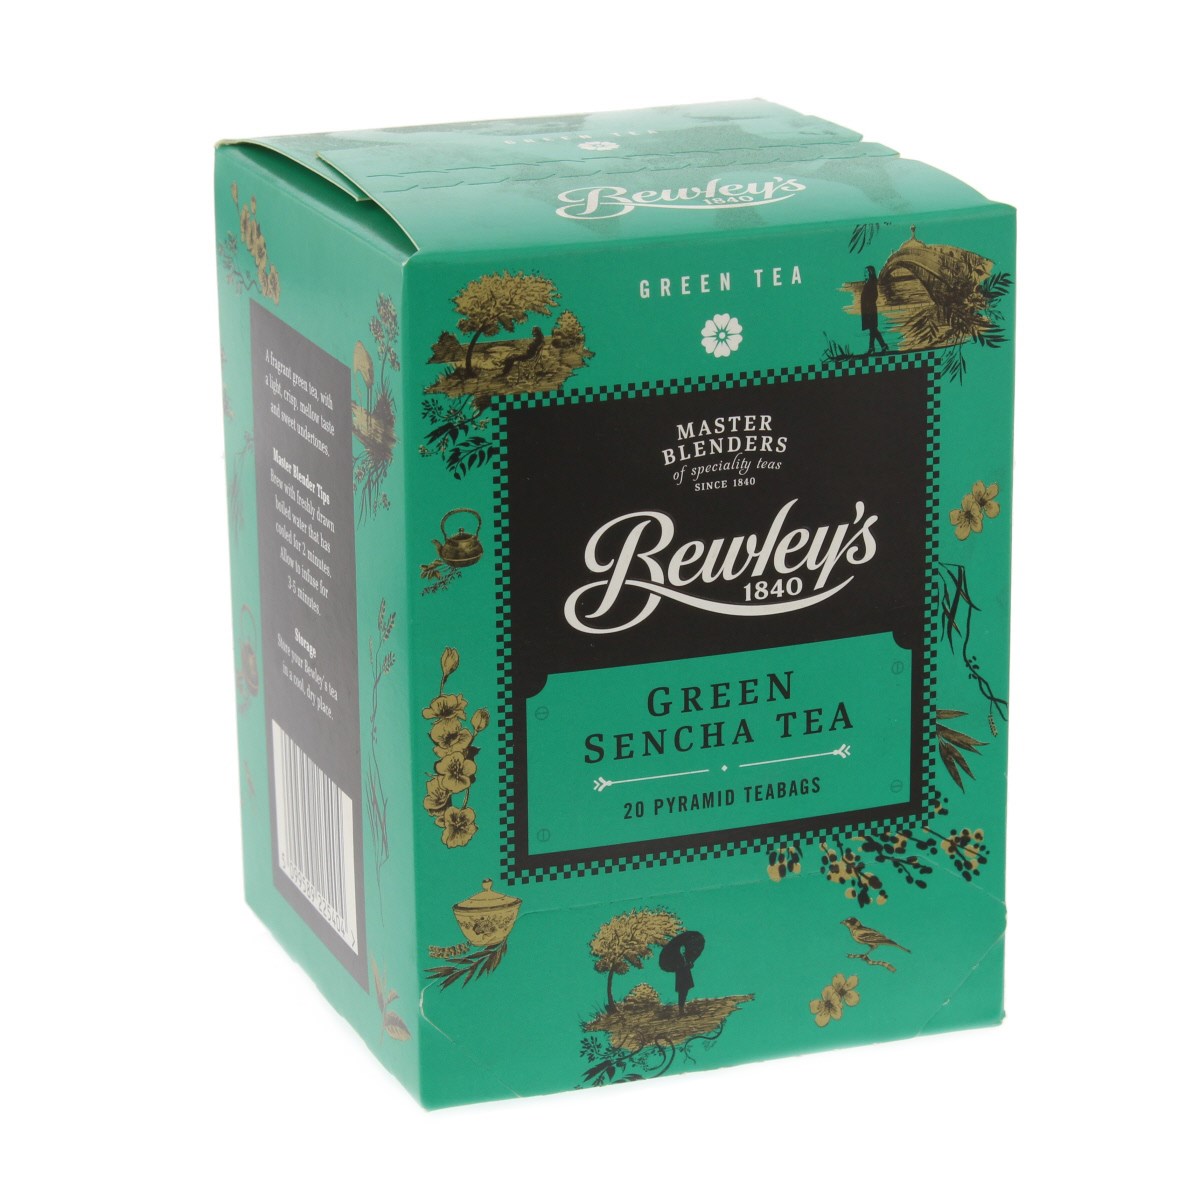 Bewleys Green Sencha Tea Bags